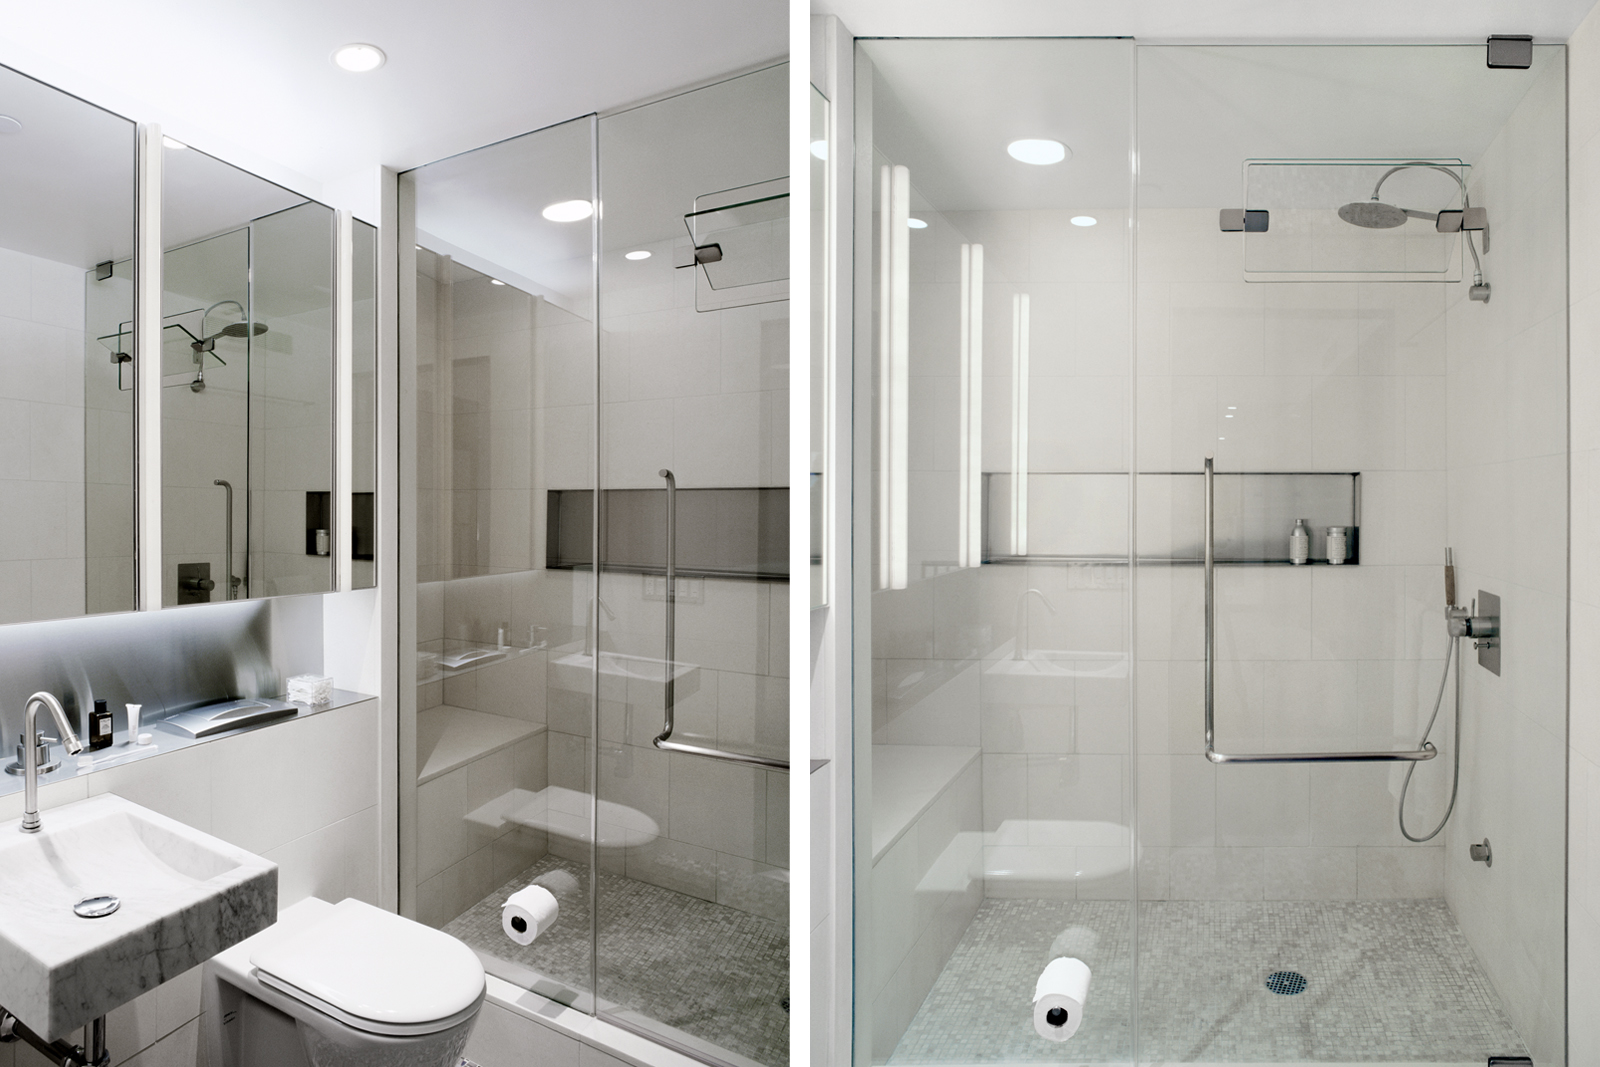 14-res4-resolution-4-architecture-modern-apartment-residential-nychay-loft-interior-bathroom-shower.jpg